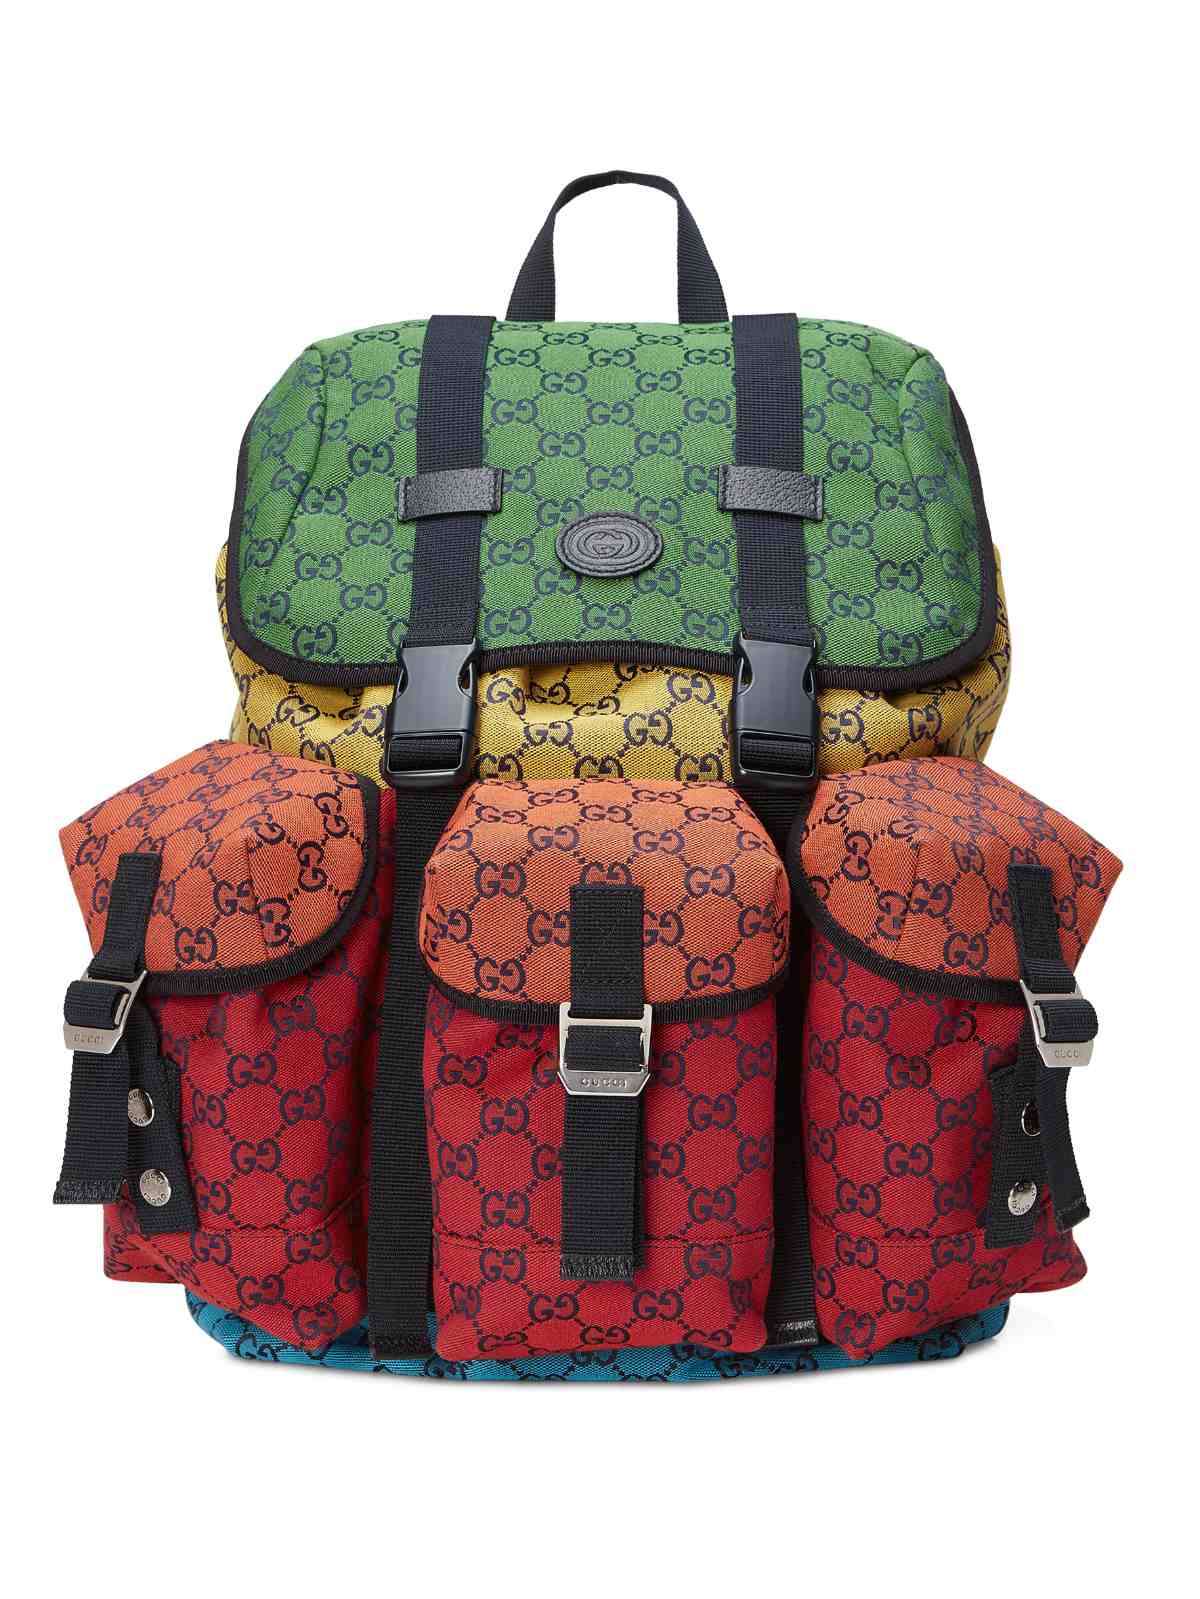 Gucci Presents Its New Multicolour Collection